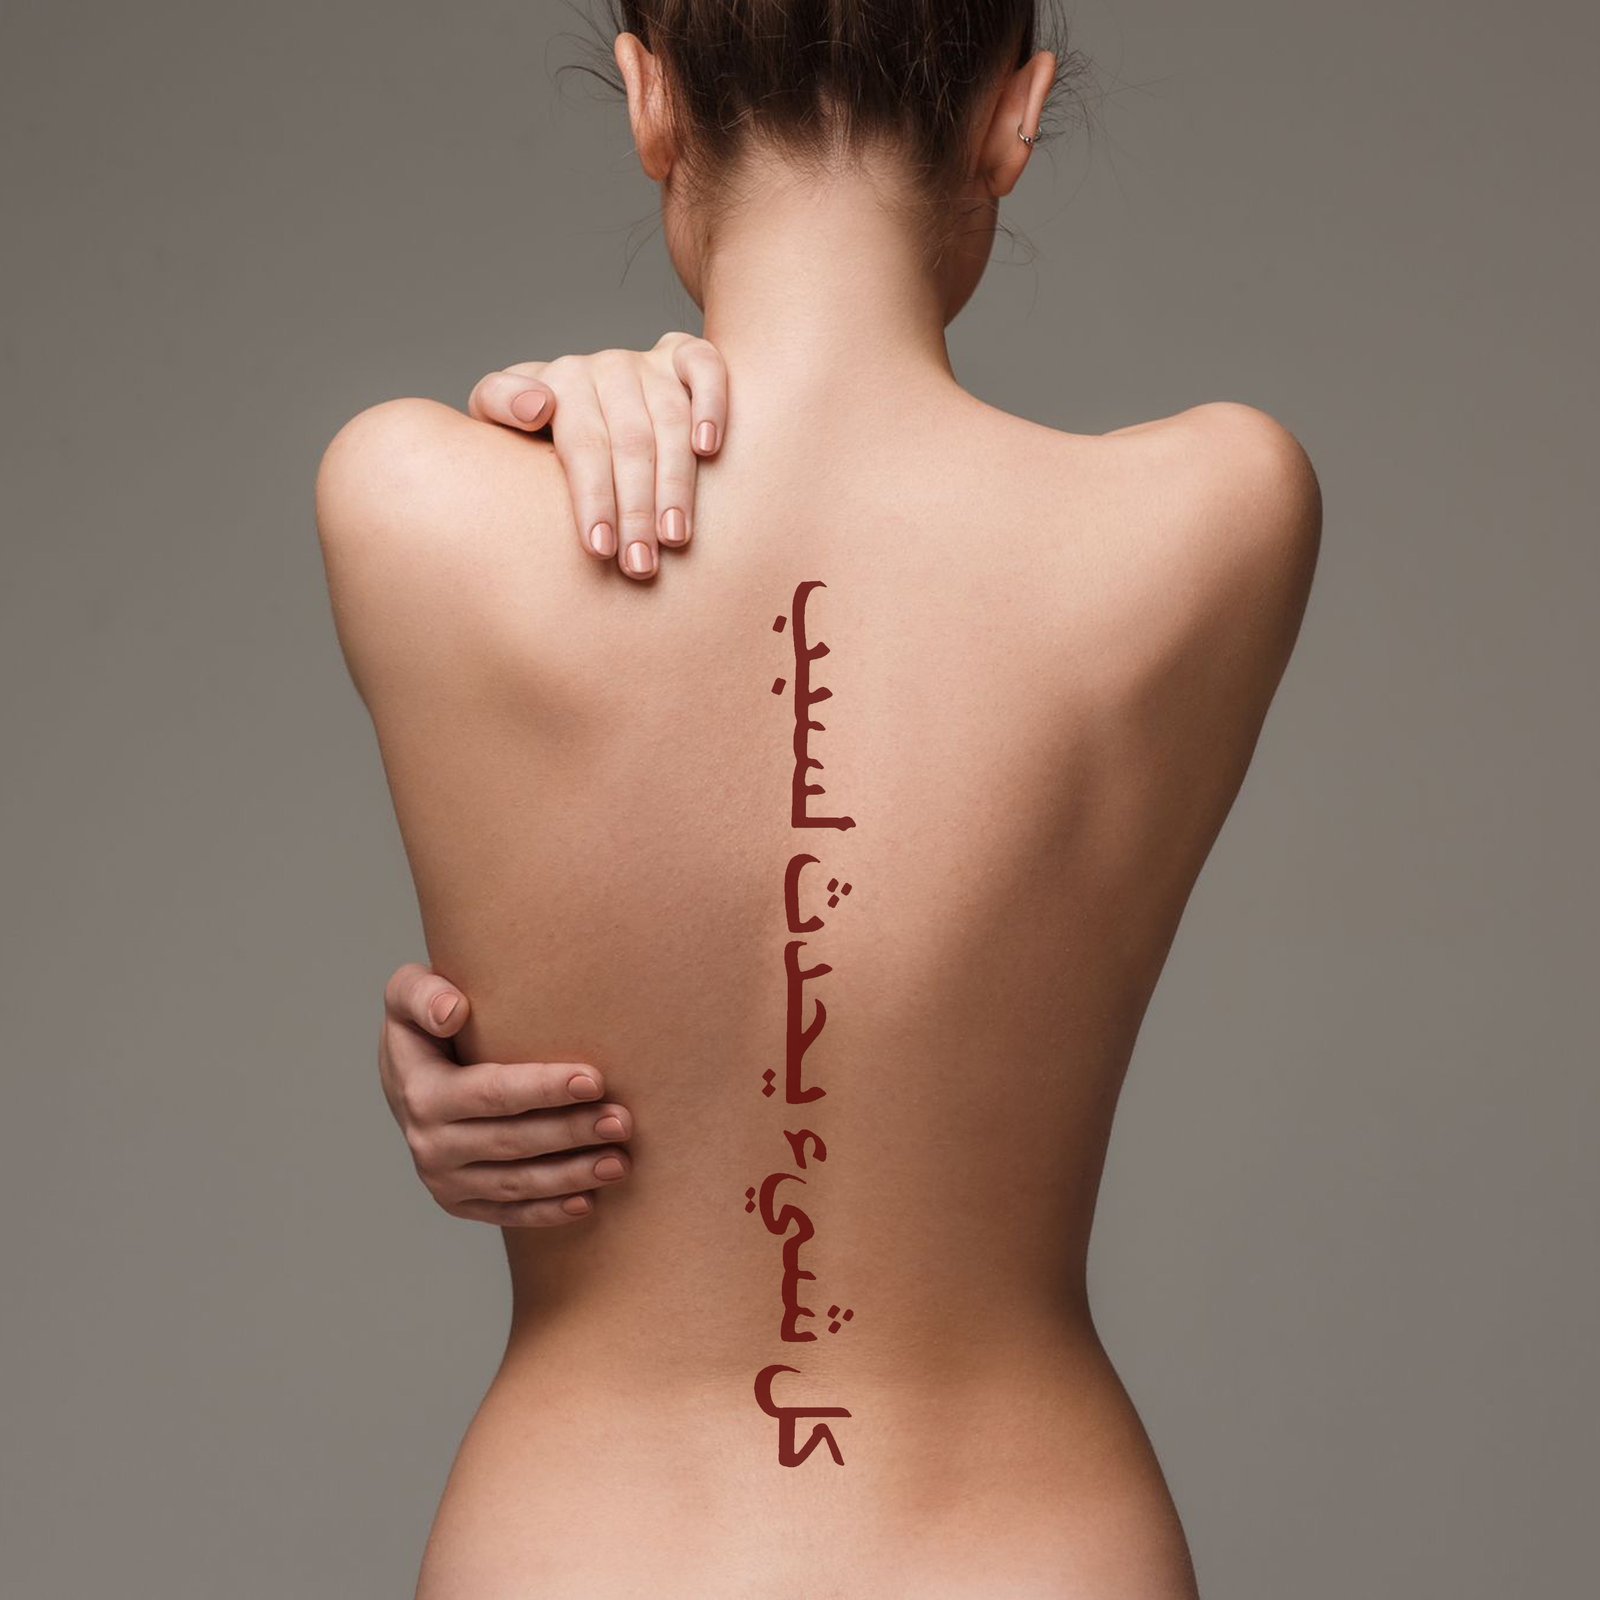 Awesome Arabic Tattoo - Arabic Tattoo Designs | Body suit tattoo, Arm  tattoos for guys, Arabic tattoo